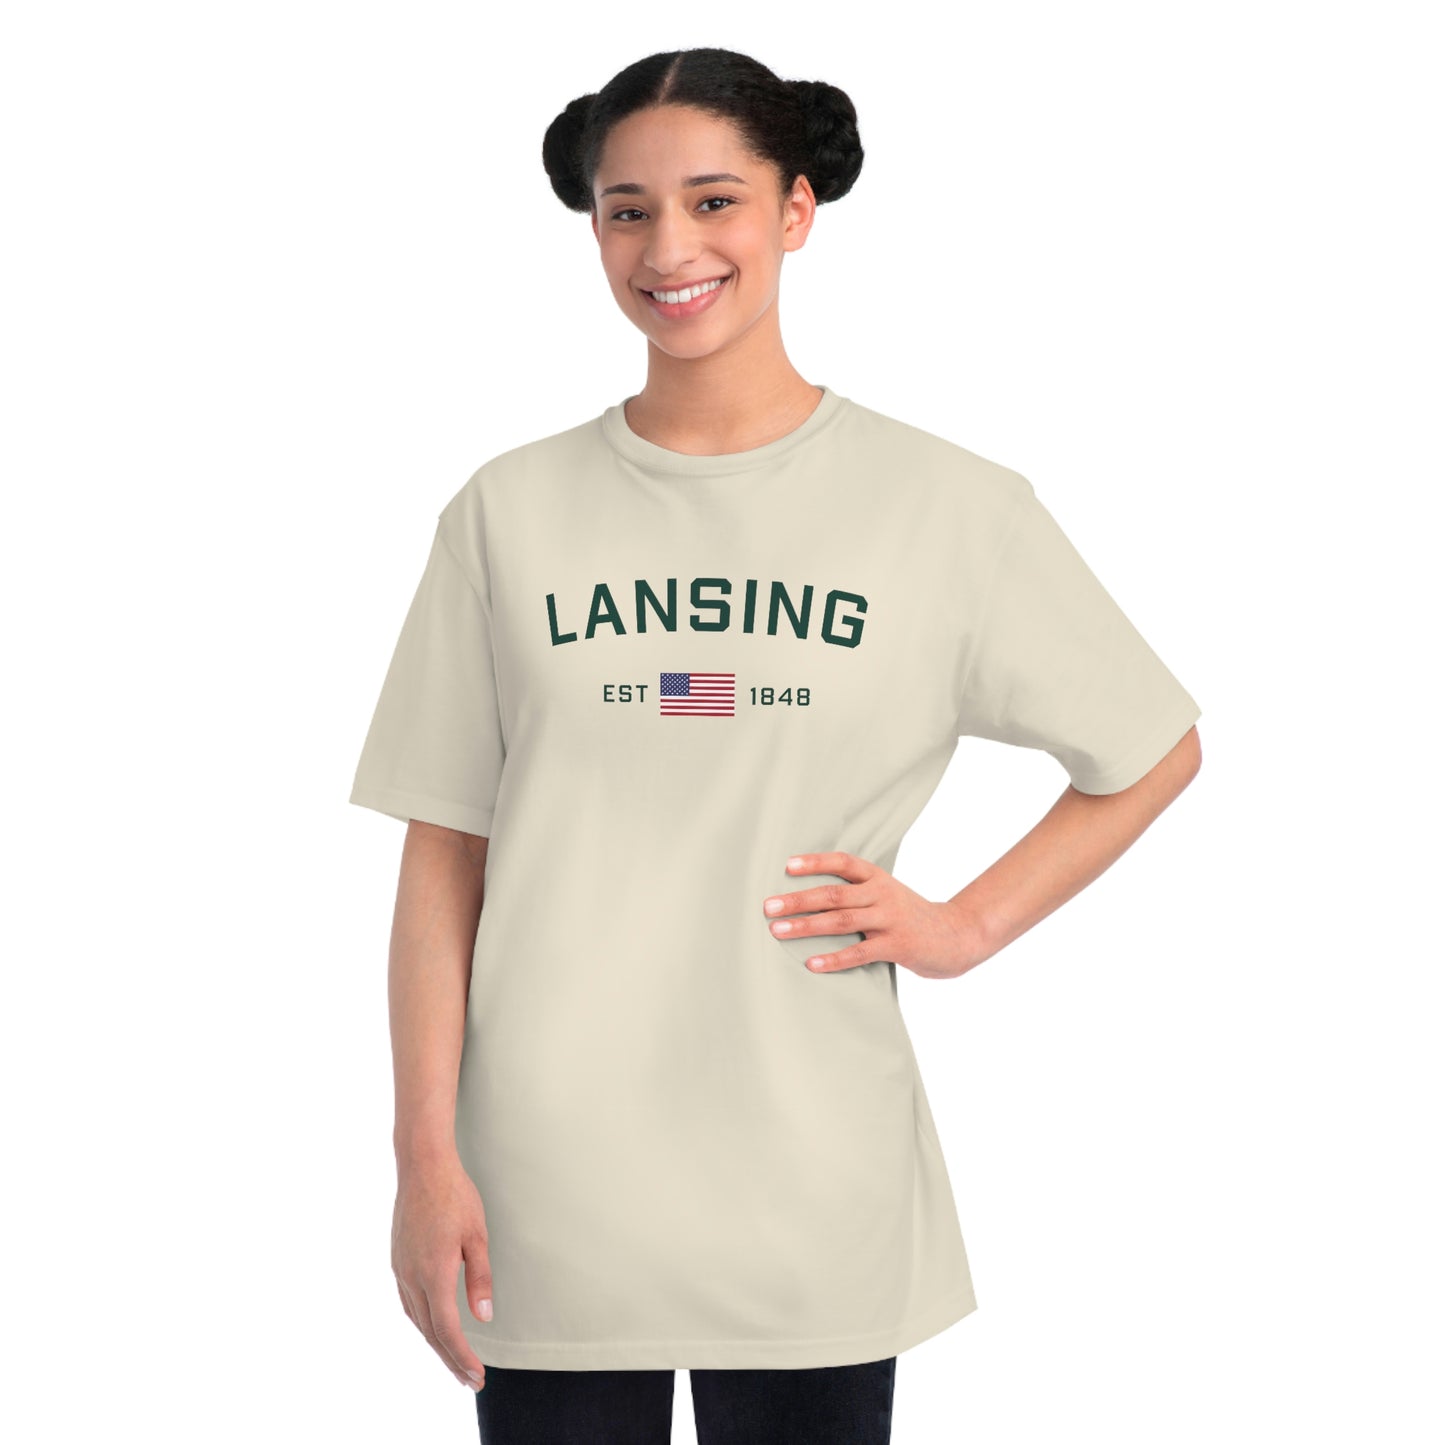 'Lansing EST 1848' T-Shirt (w/ USA Flag | Organic Unisex